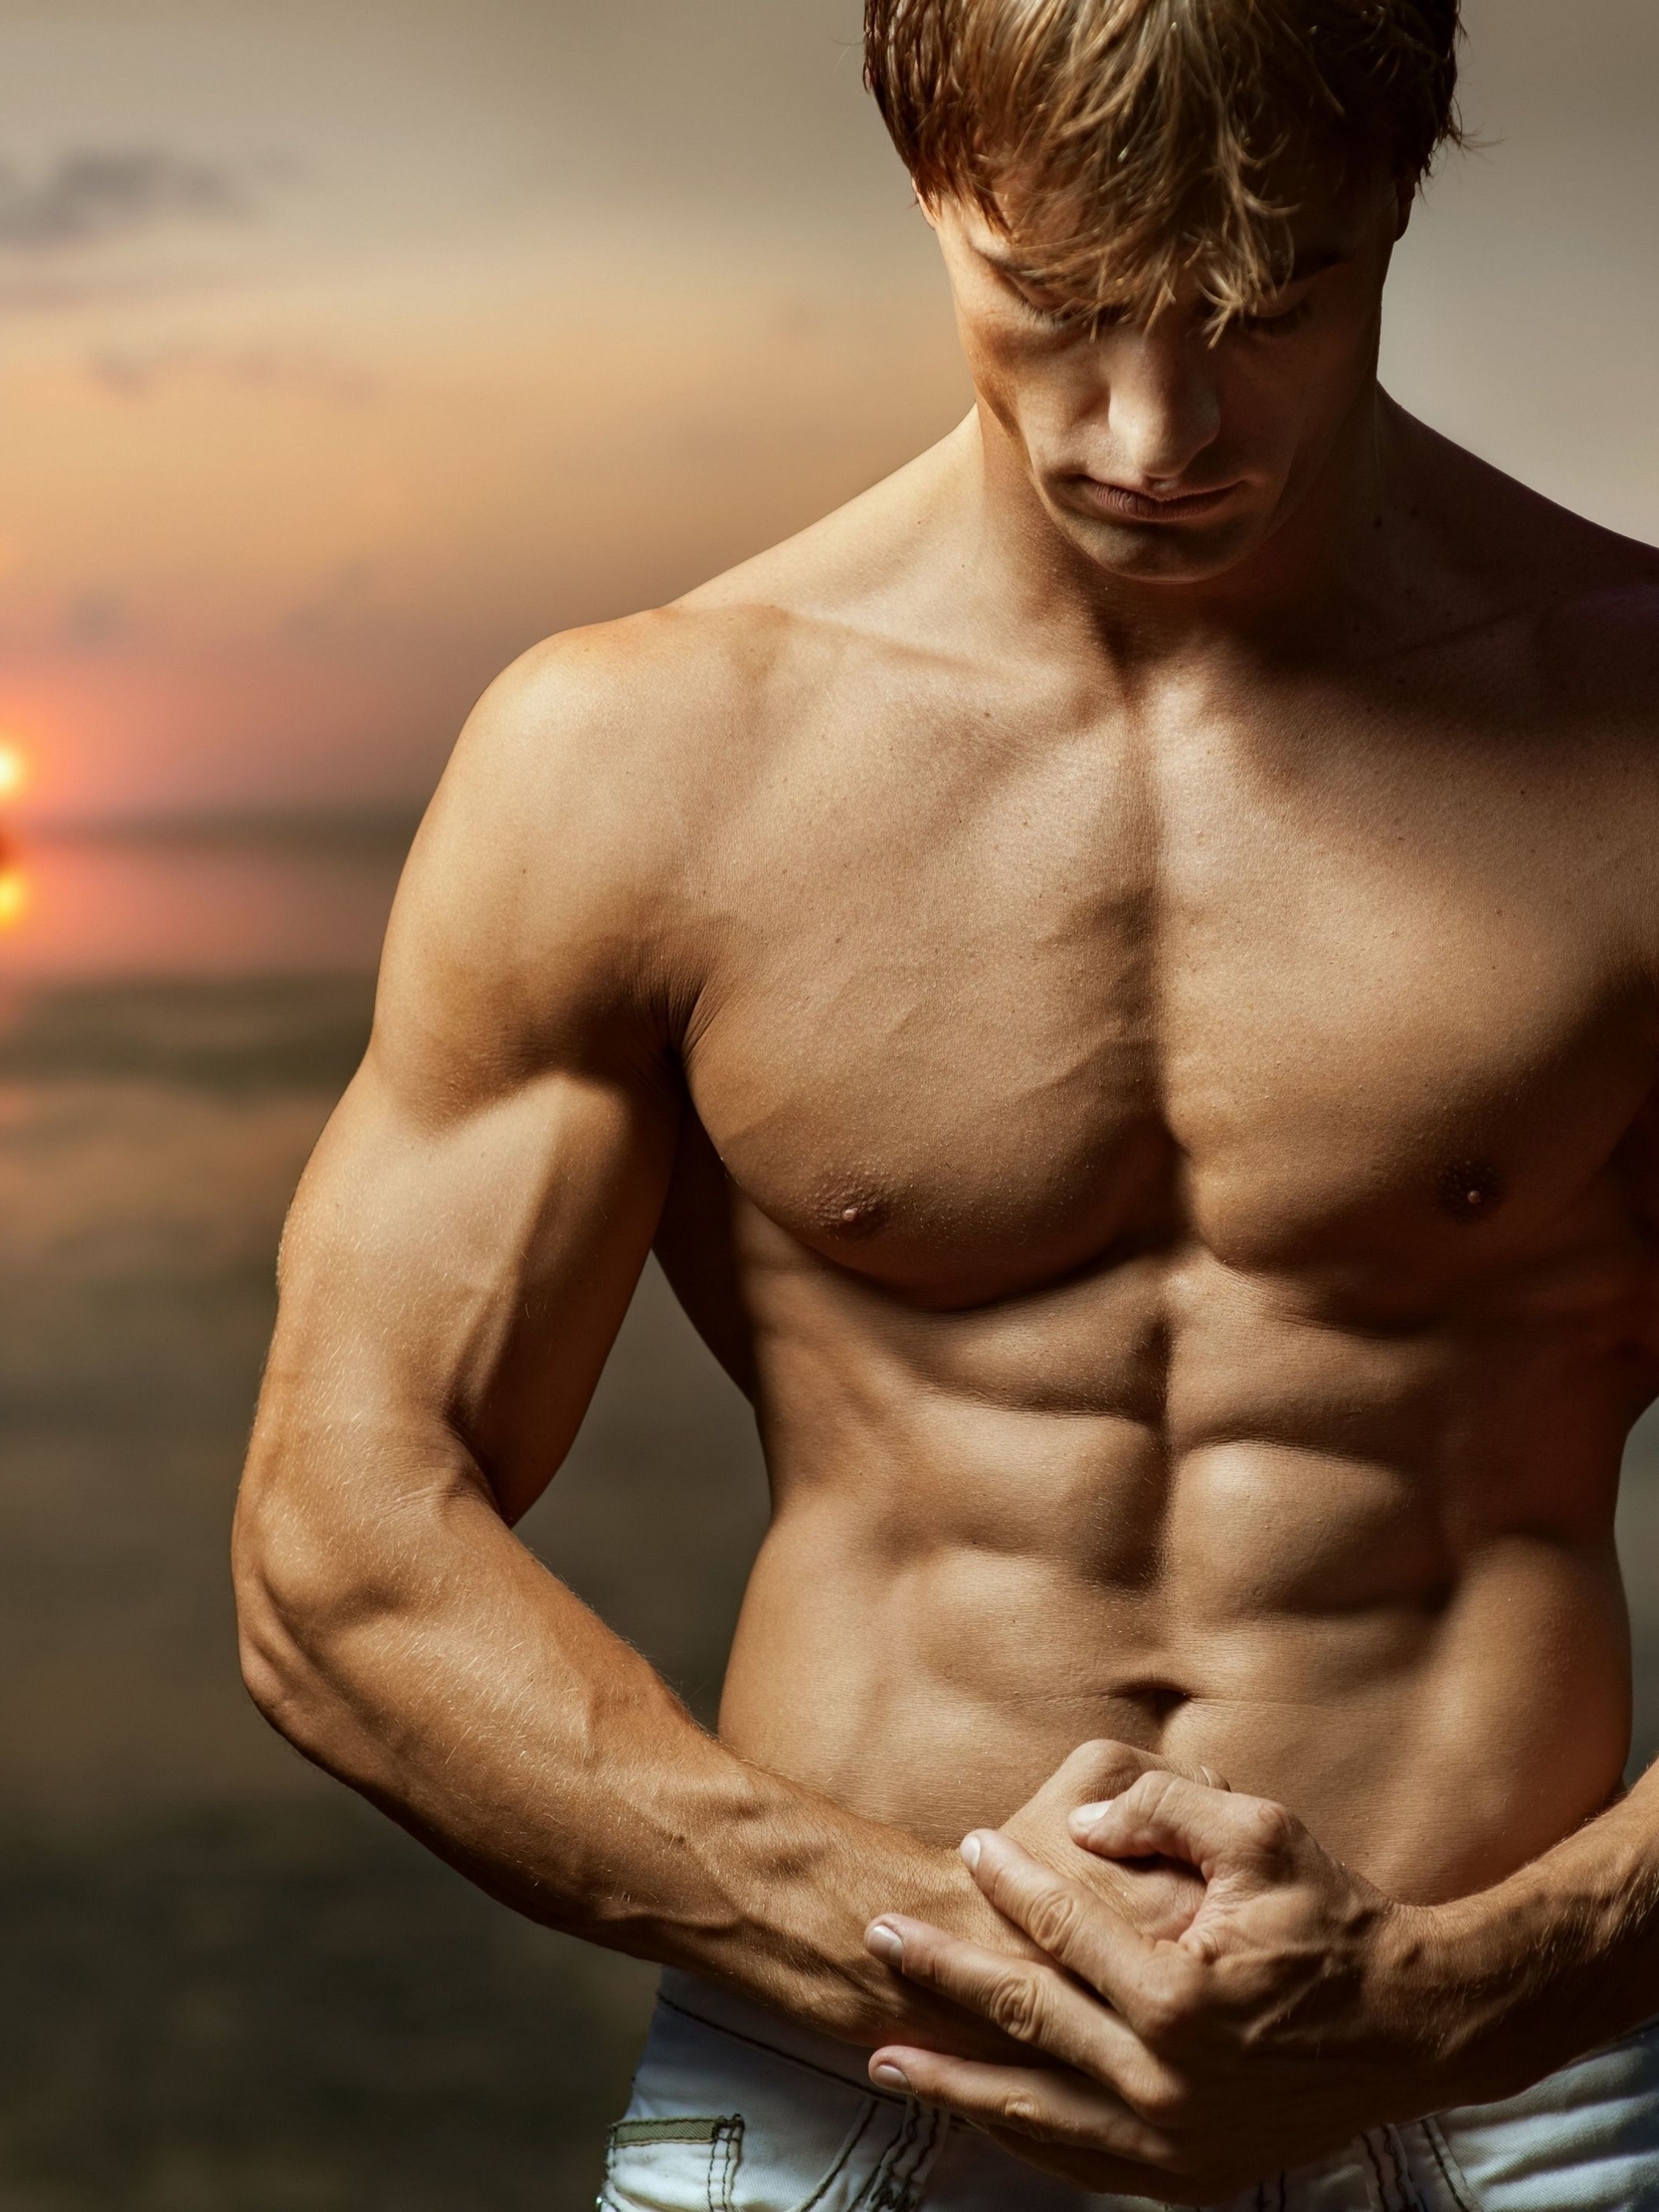 Image: Man, body, muscles, sunset